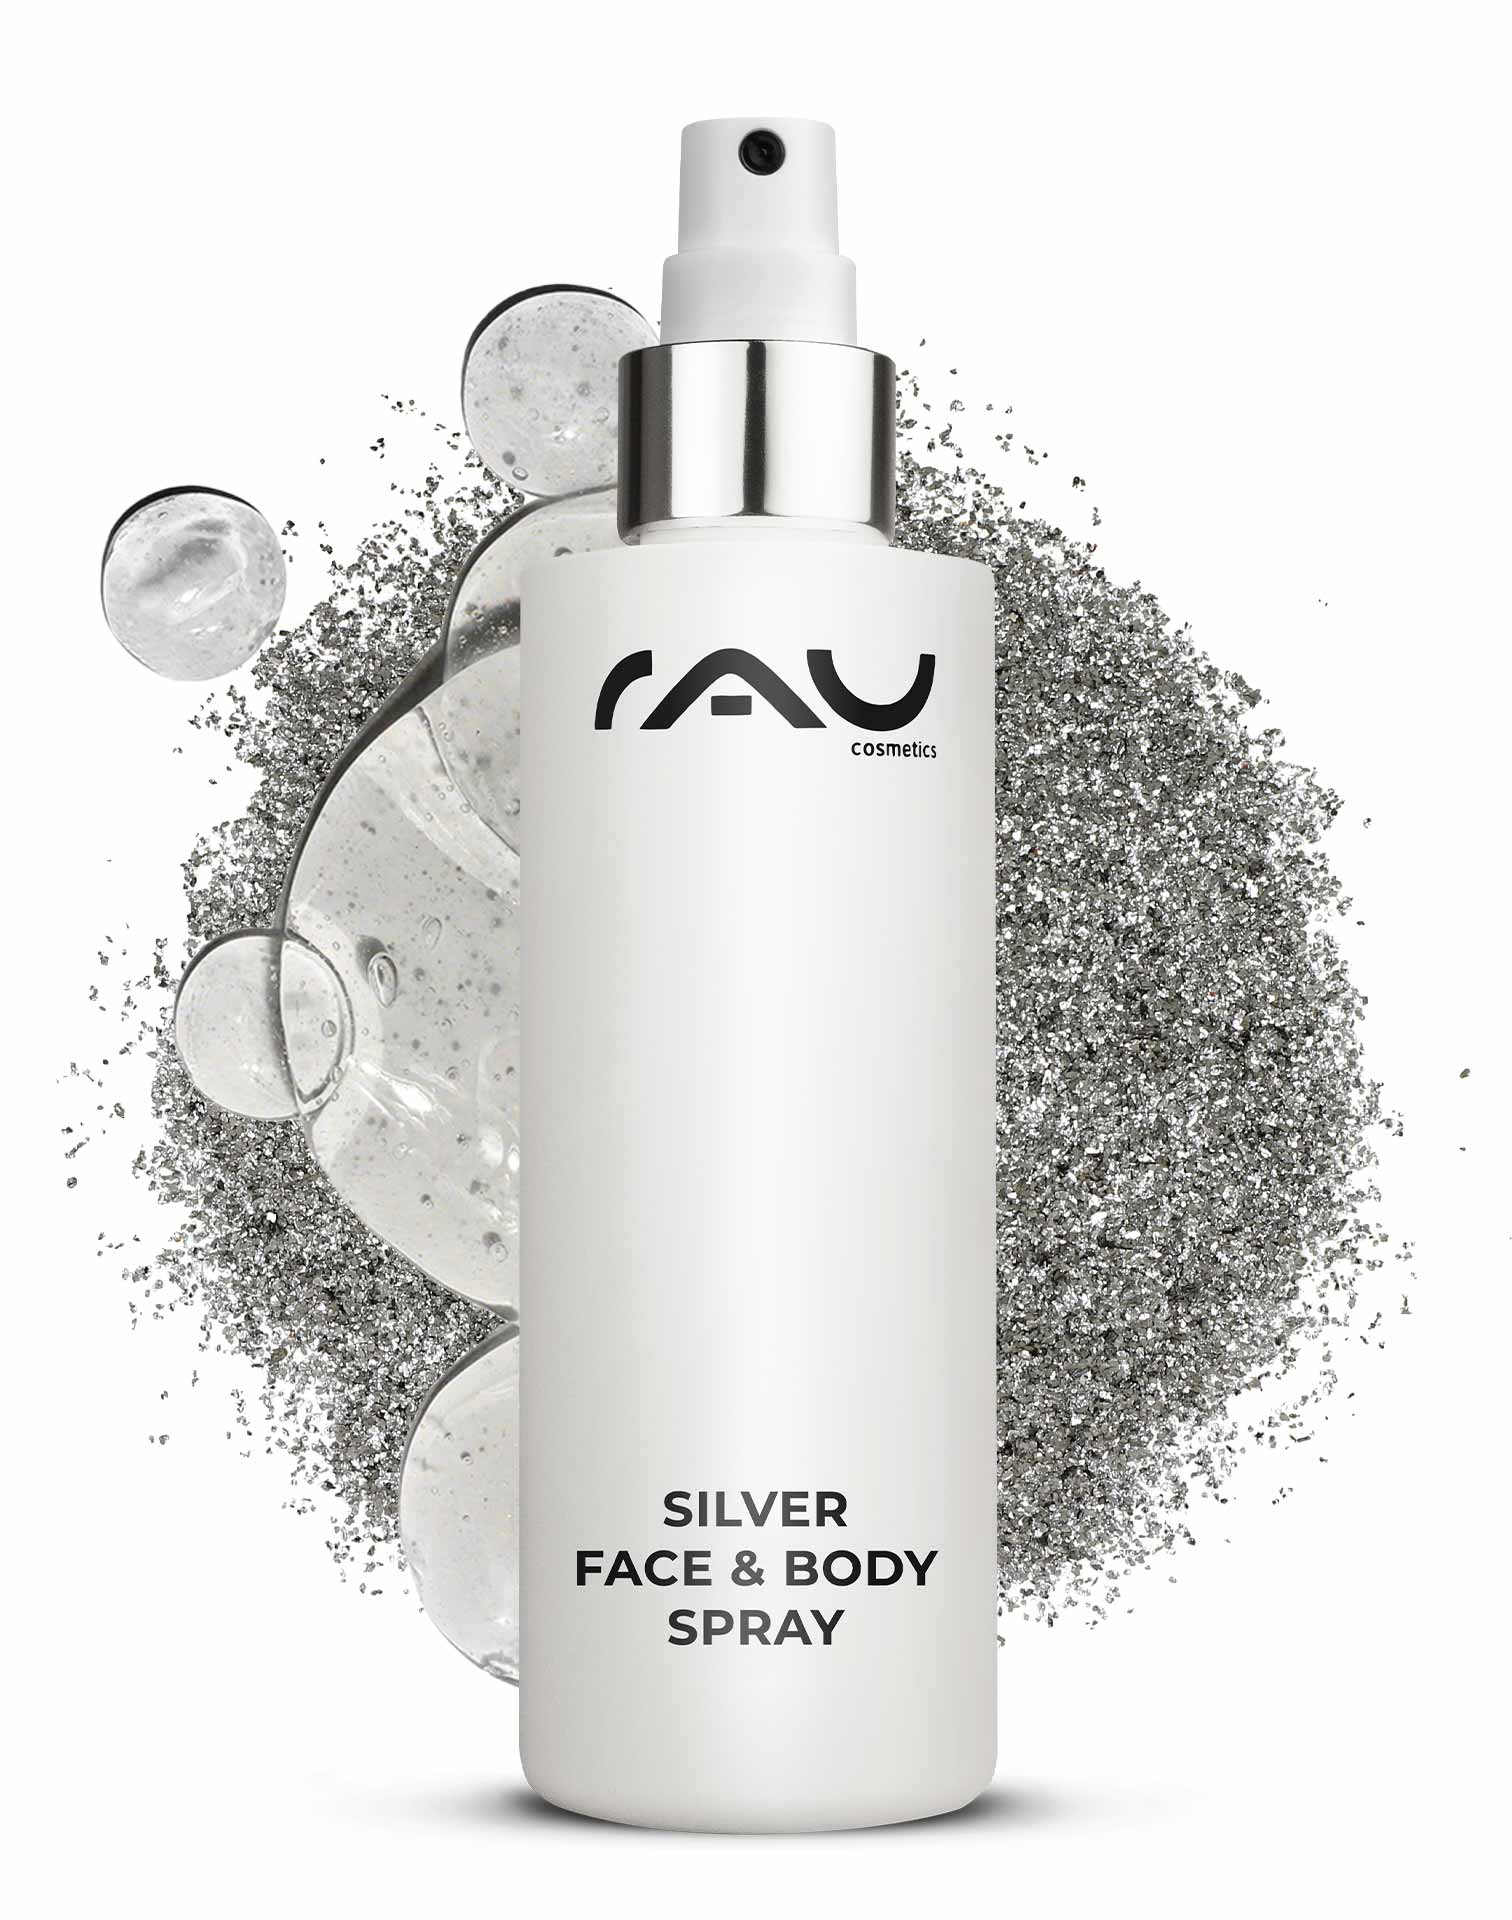 RAU Silver Face & Body Spray 200 ml - The Effective Spray Against Impurities